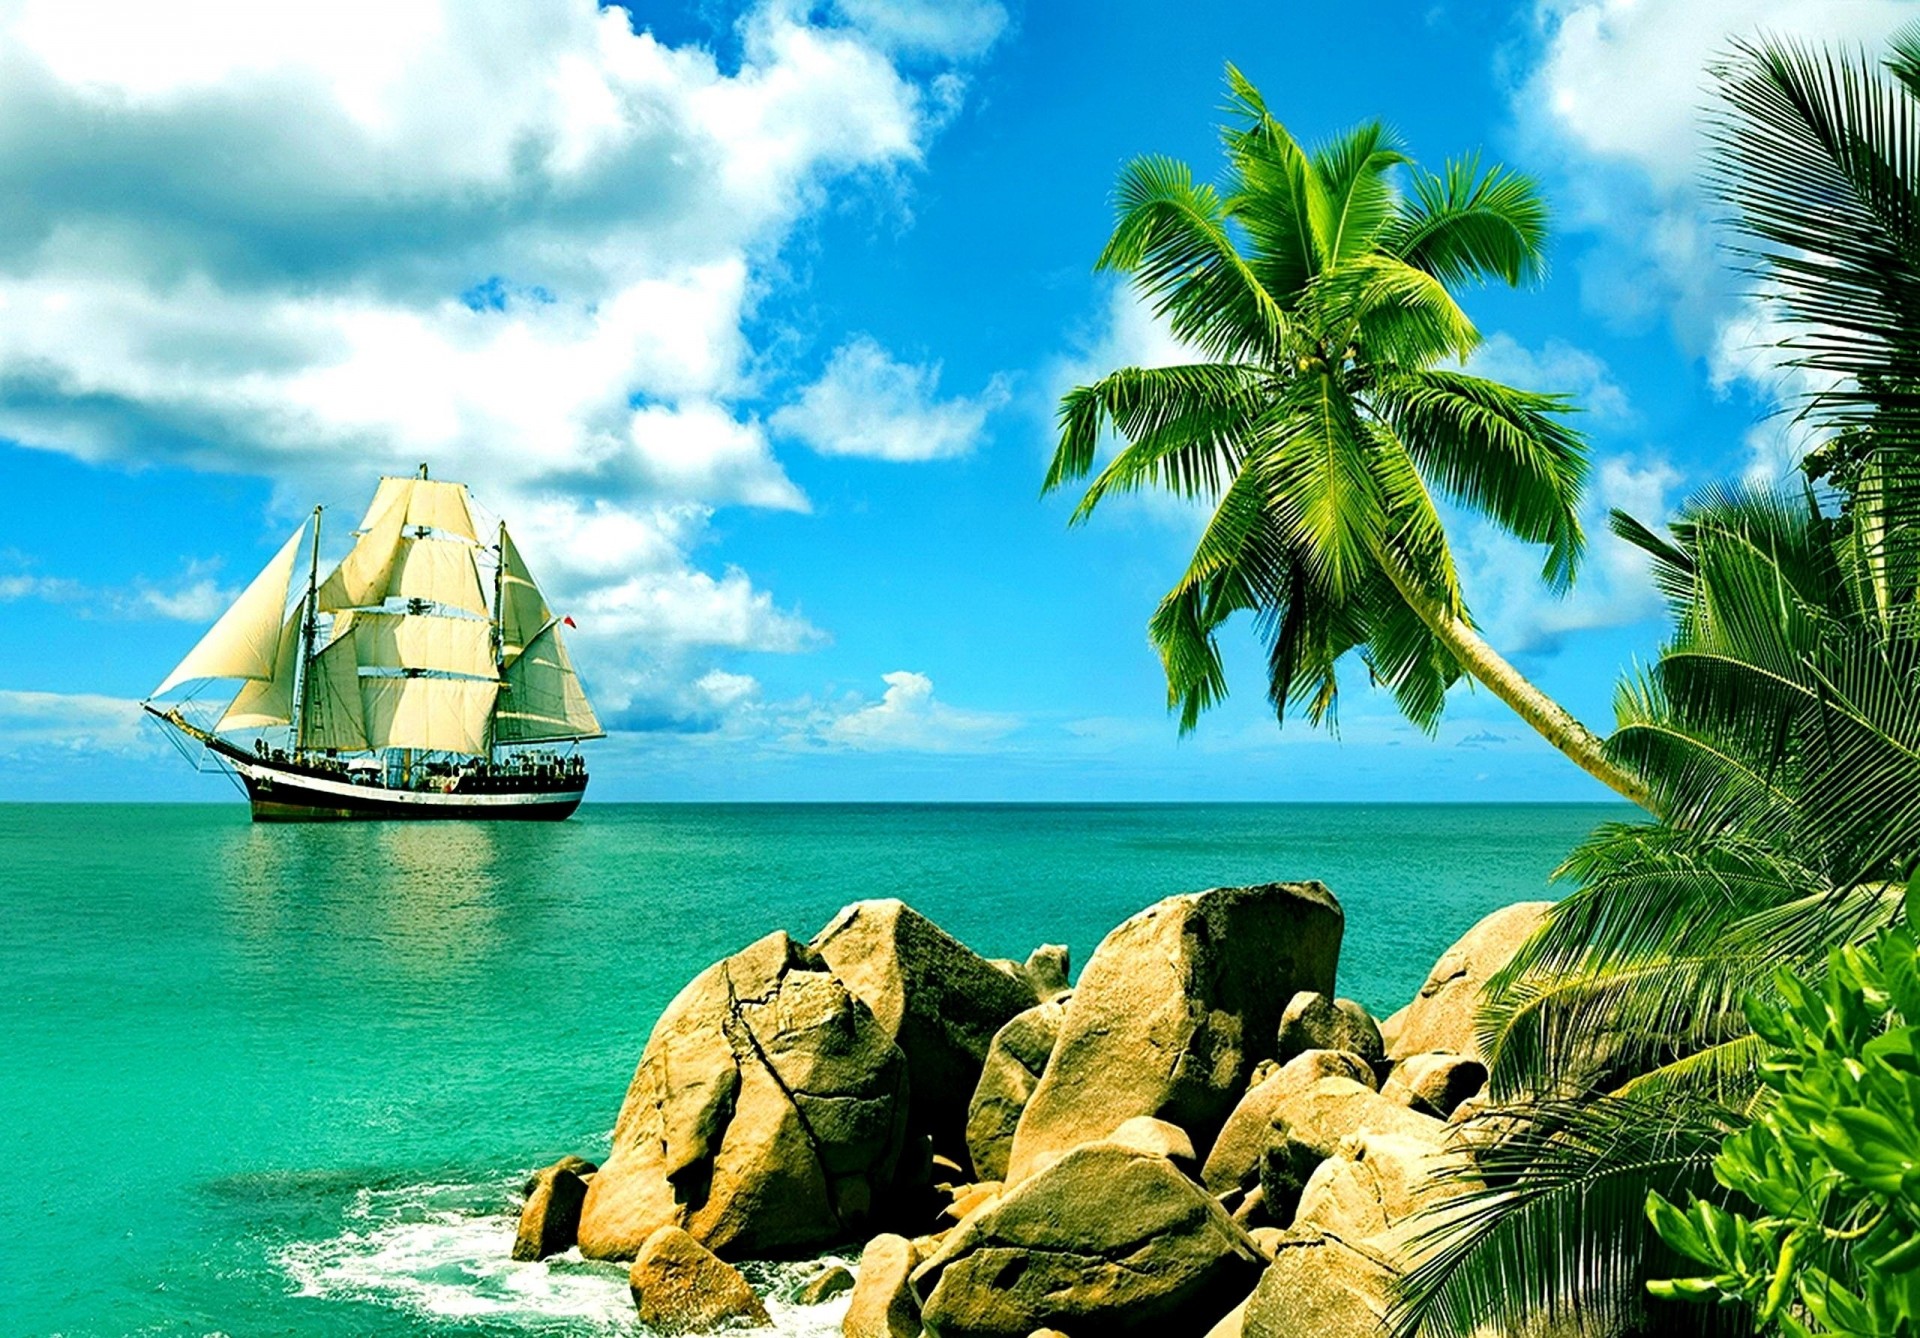 stones beach palm nature ship tropics summer sports sky clouds sailboats beautiful paradise